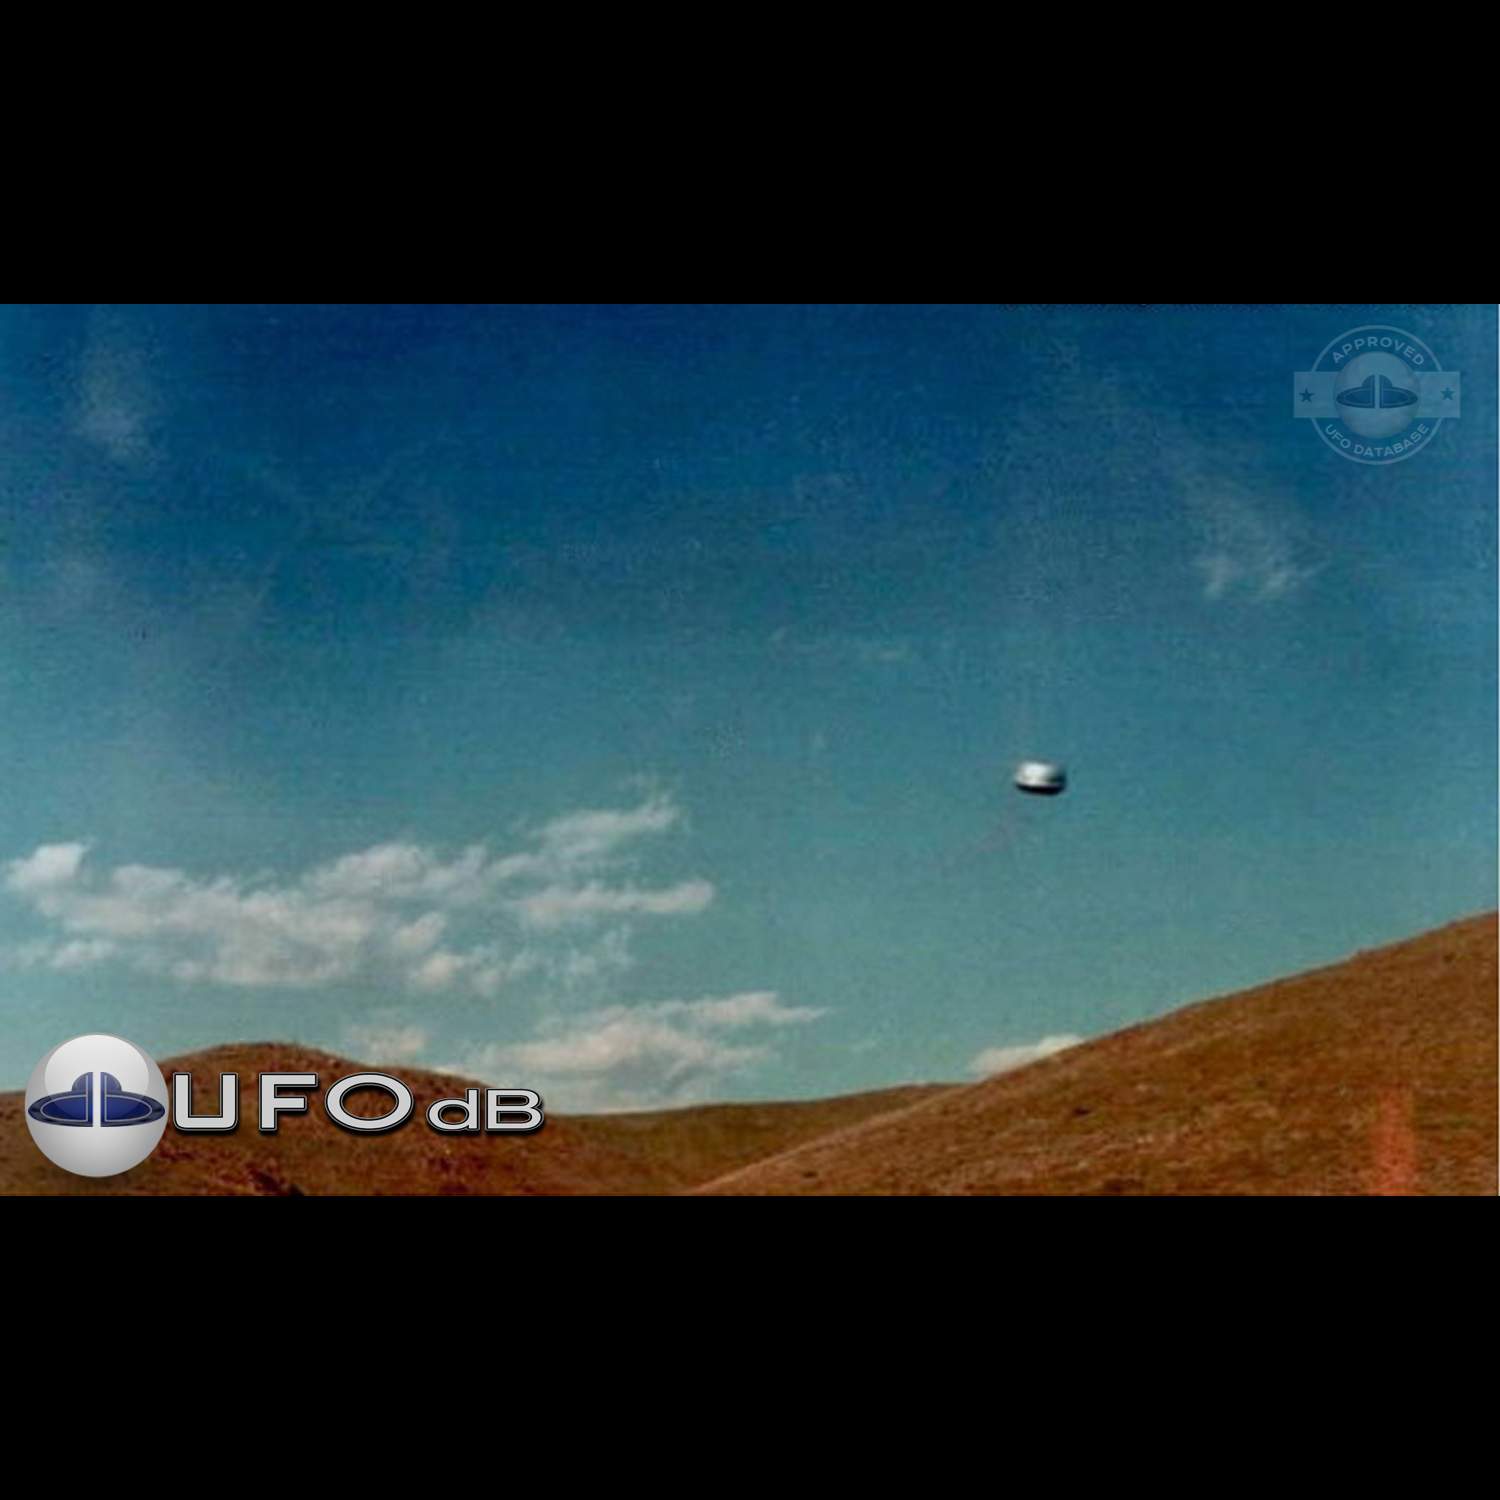 Yamanlar Mountain Peak Hitchhikers UFO Picture | Izmir, Turkey 1996 UFO Picture #182-1